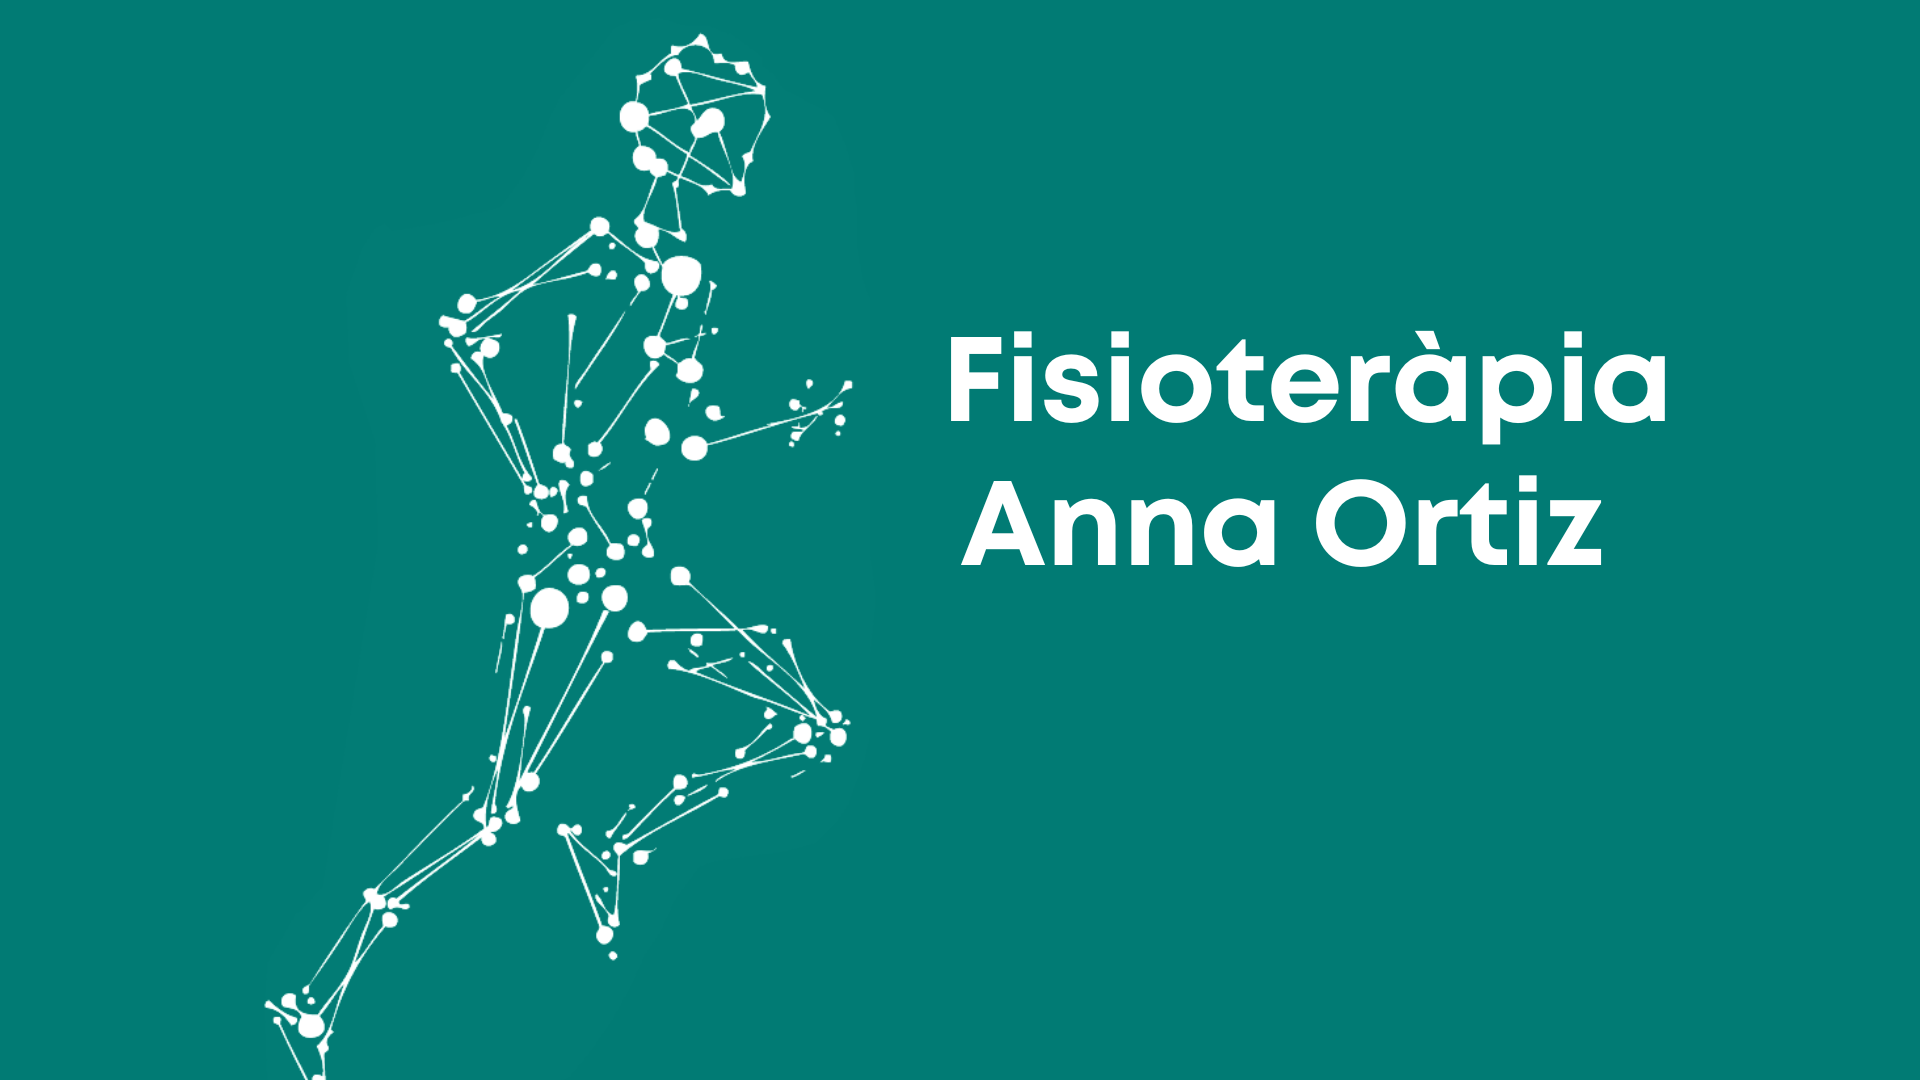 Anna Ortiz Fisioterapeuta